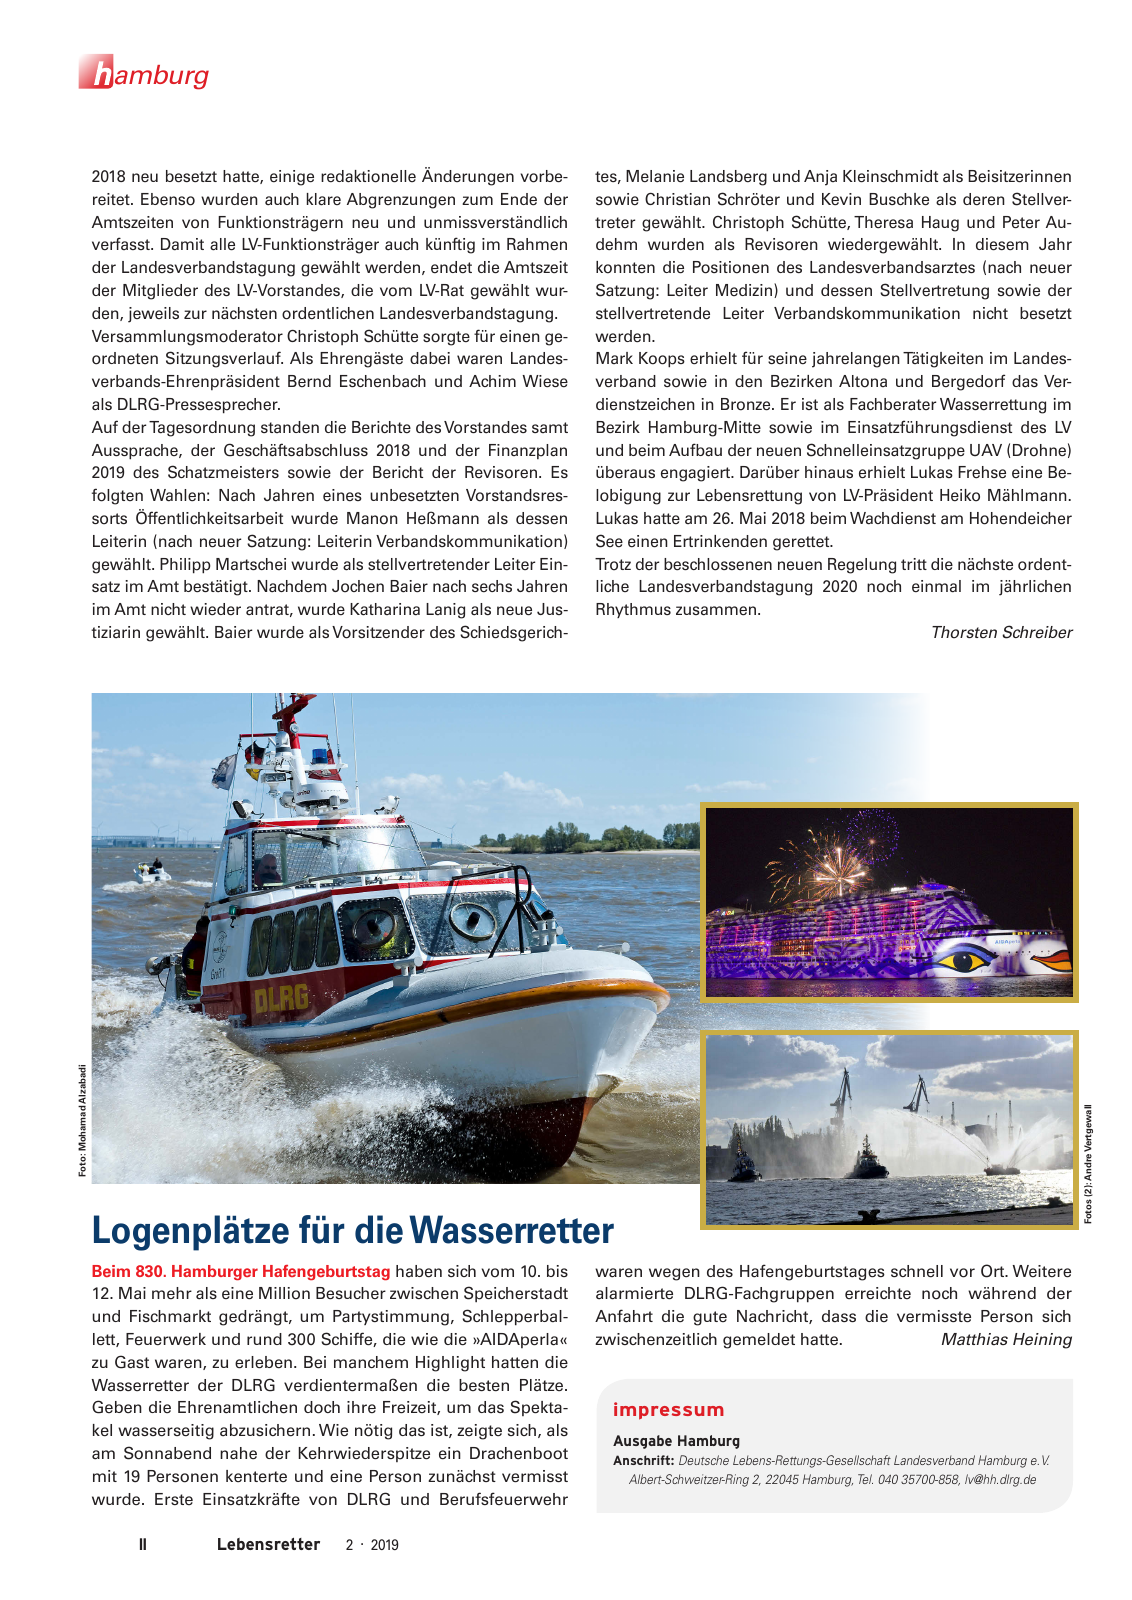 Vorschau Lebensretter 2/2019 - Hamburg Regionalausgabe Seite 4